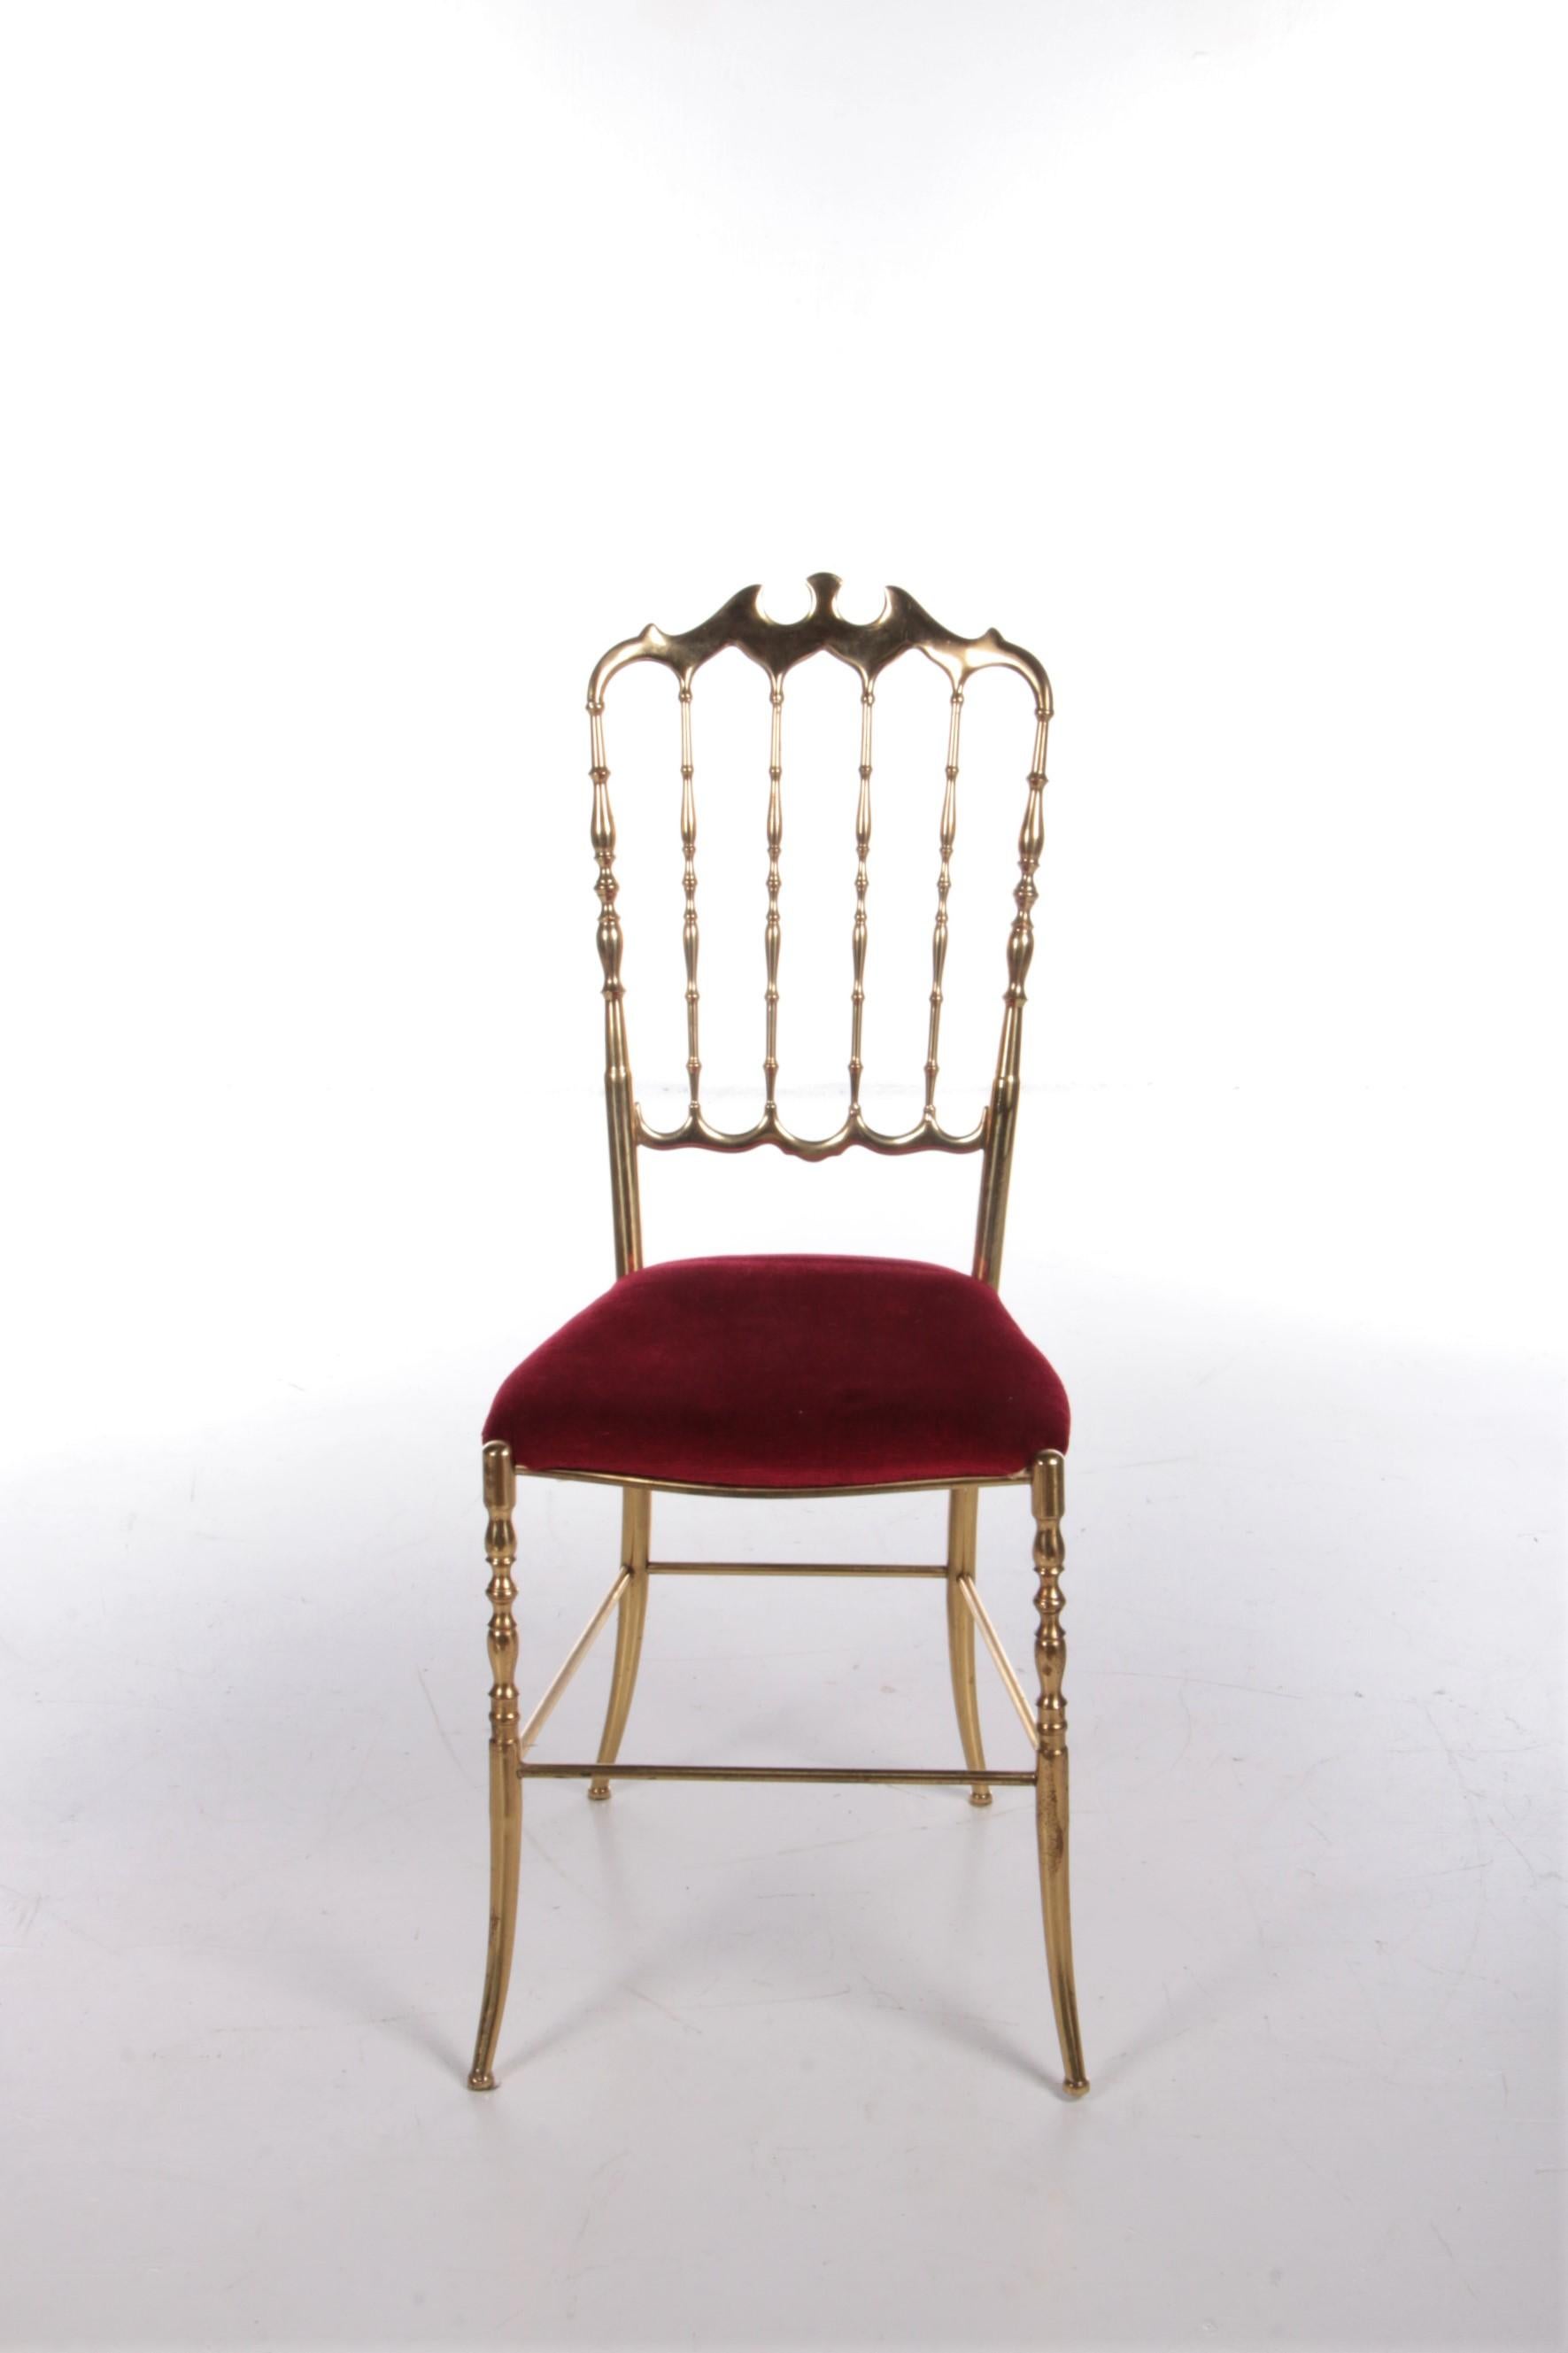 Hollywood Regency Italian Design Side Chair by Giuseppe Gaetano Descalzi for Chiavari, Italy 1950 For Sale